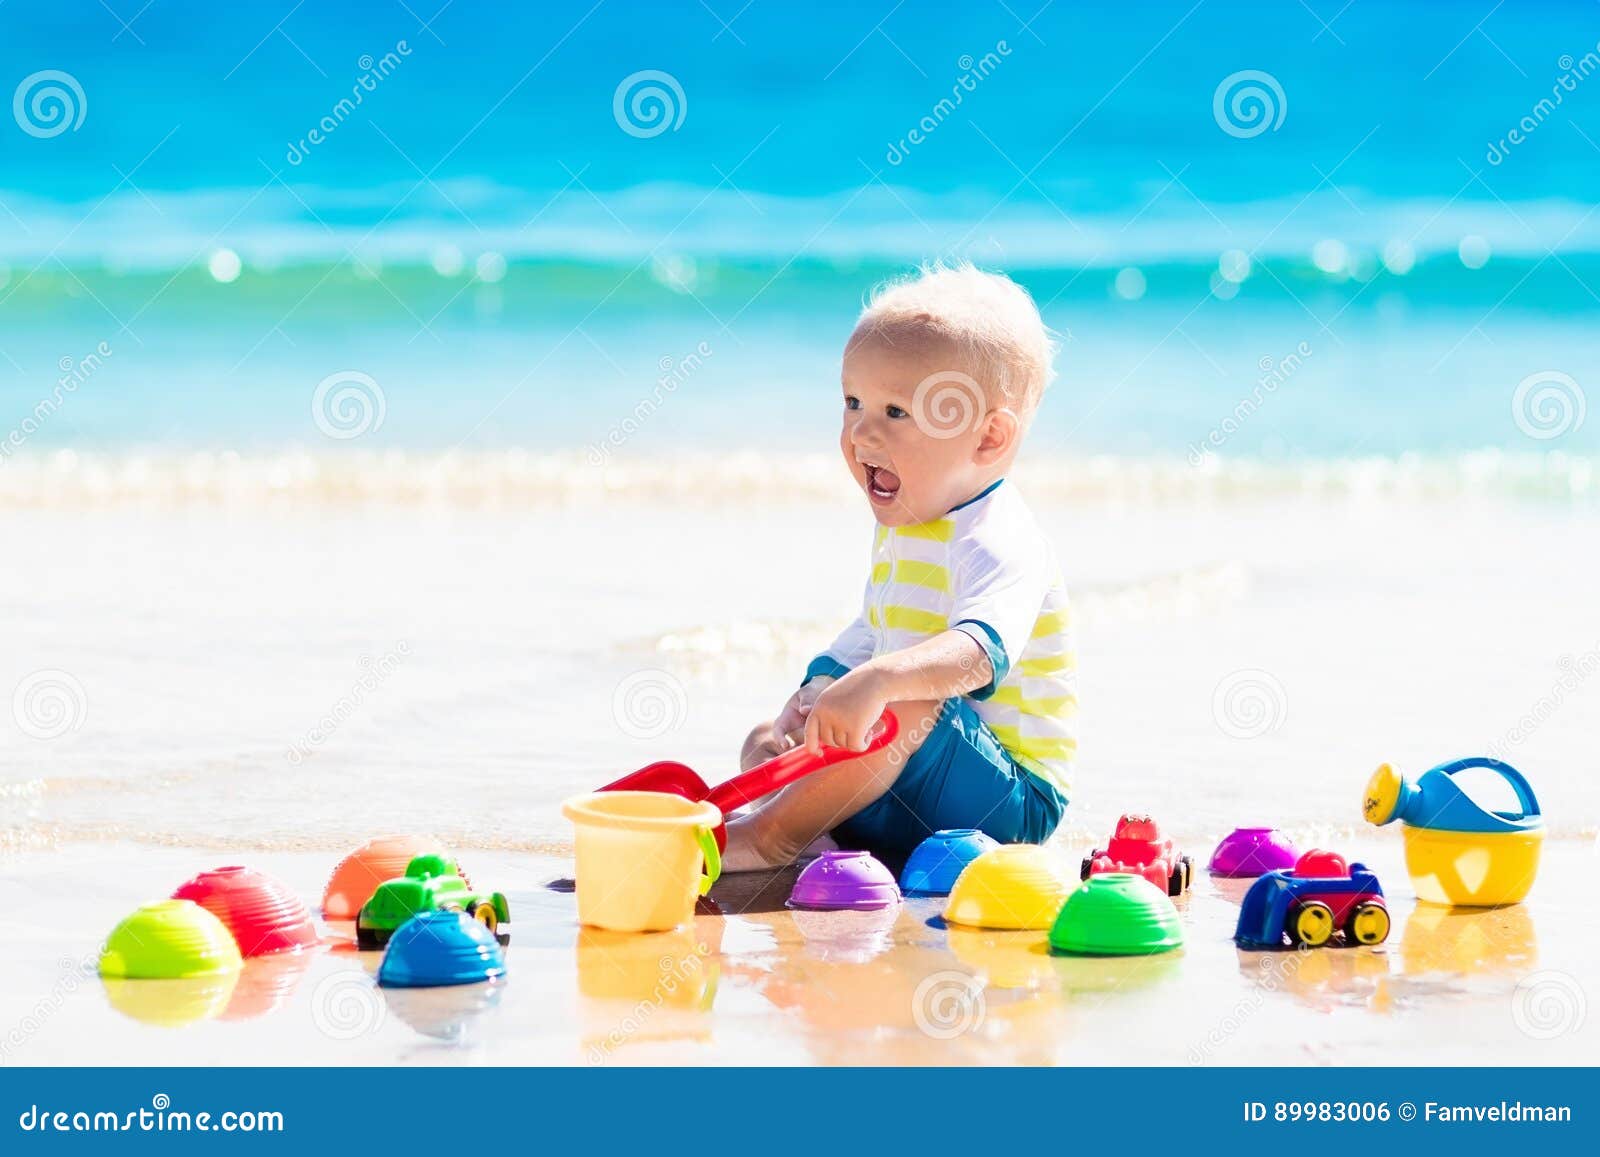 https://thumbs.dreamstime.com/z/baby-playing-tropical-beach-digging-sand-cute-laughing-boy-wearing-sun-protection-rash-guard-bucket-shovel-89983006.jpg